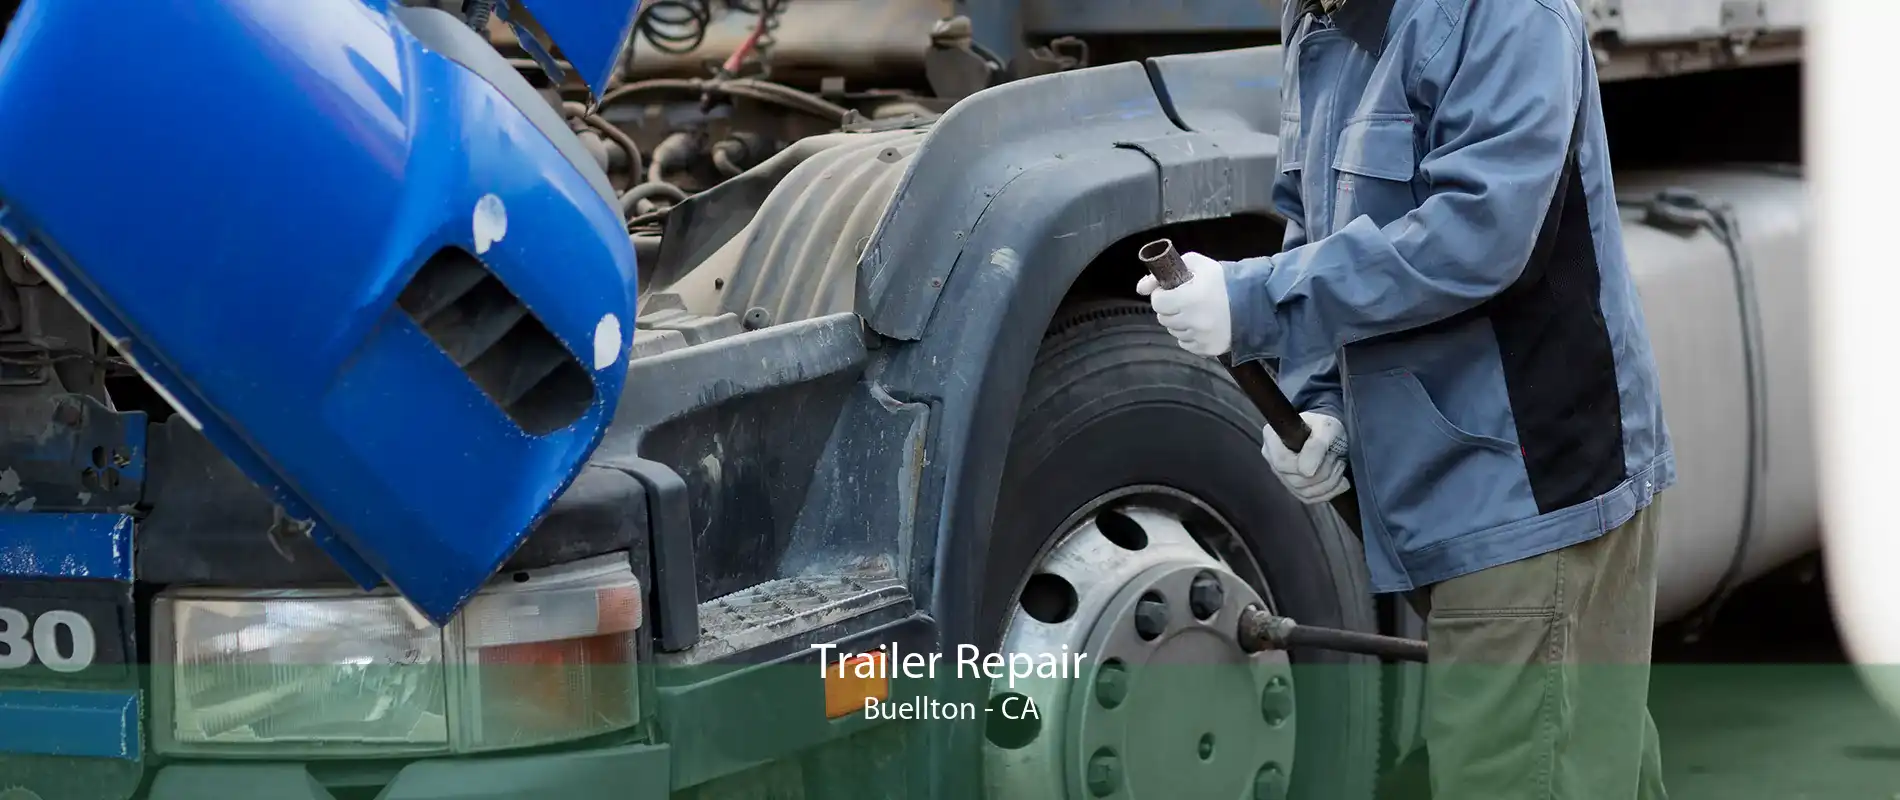 Trailer Repair Buellton - CA